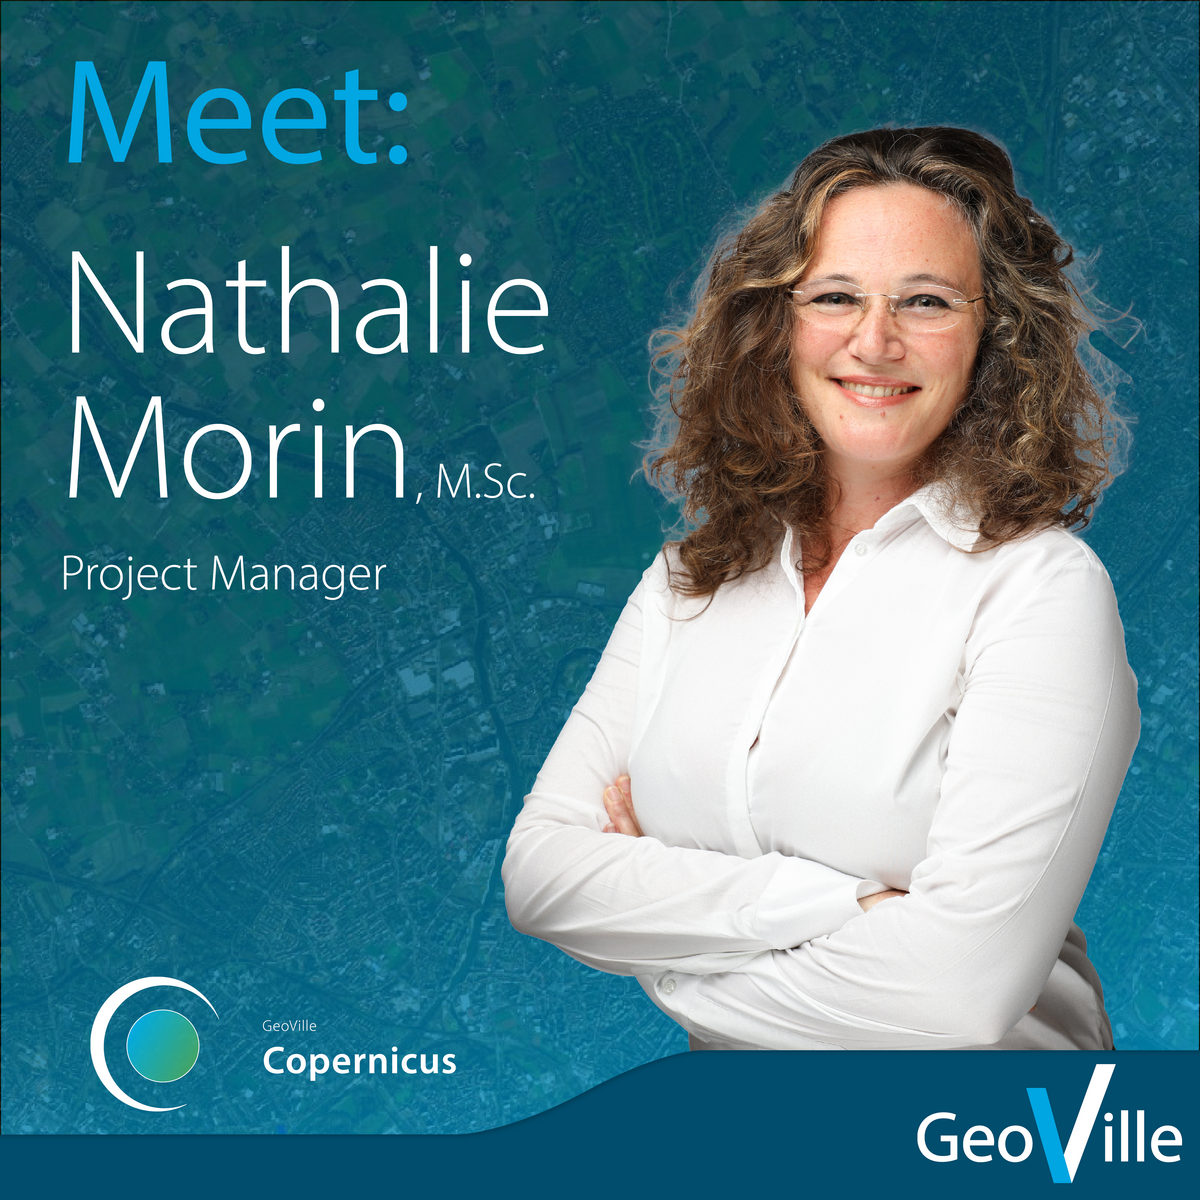 Meet: Nathalie Morin